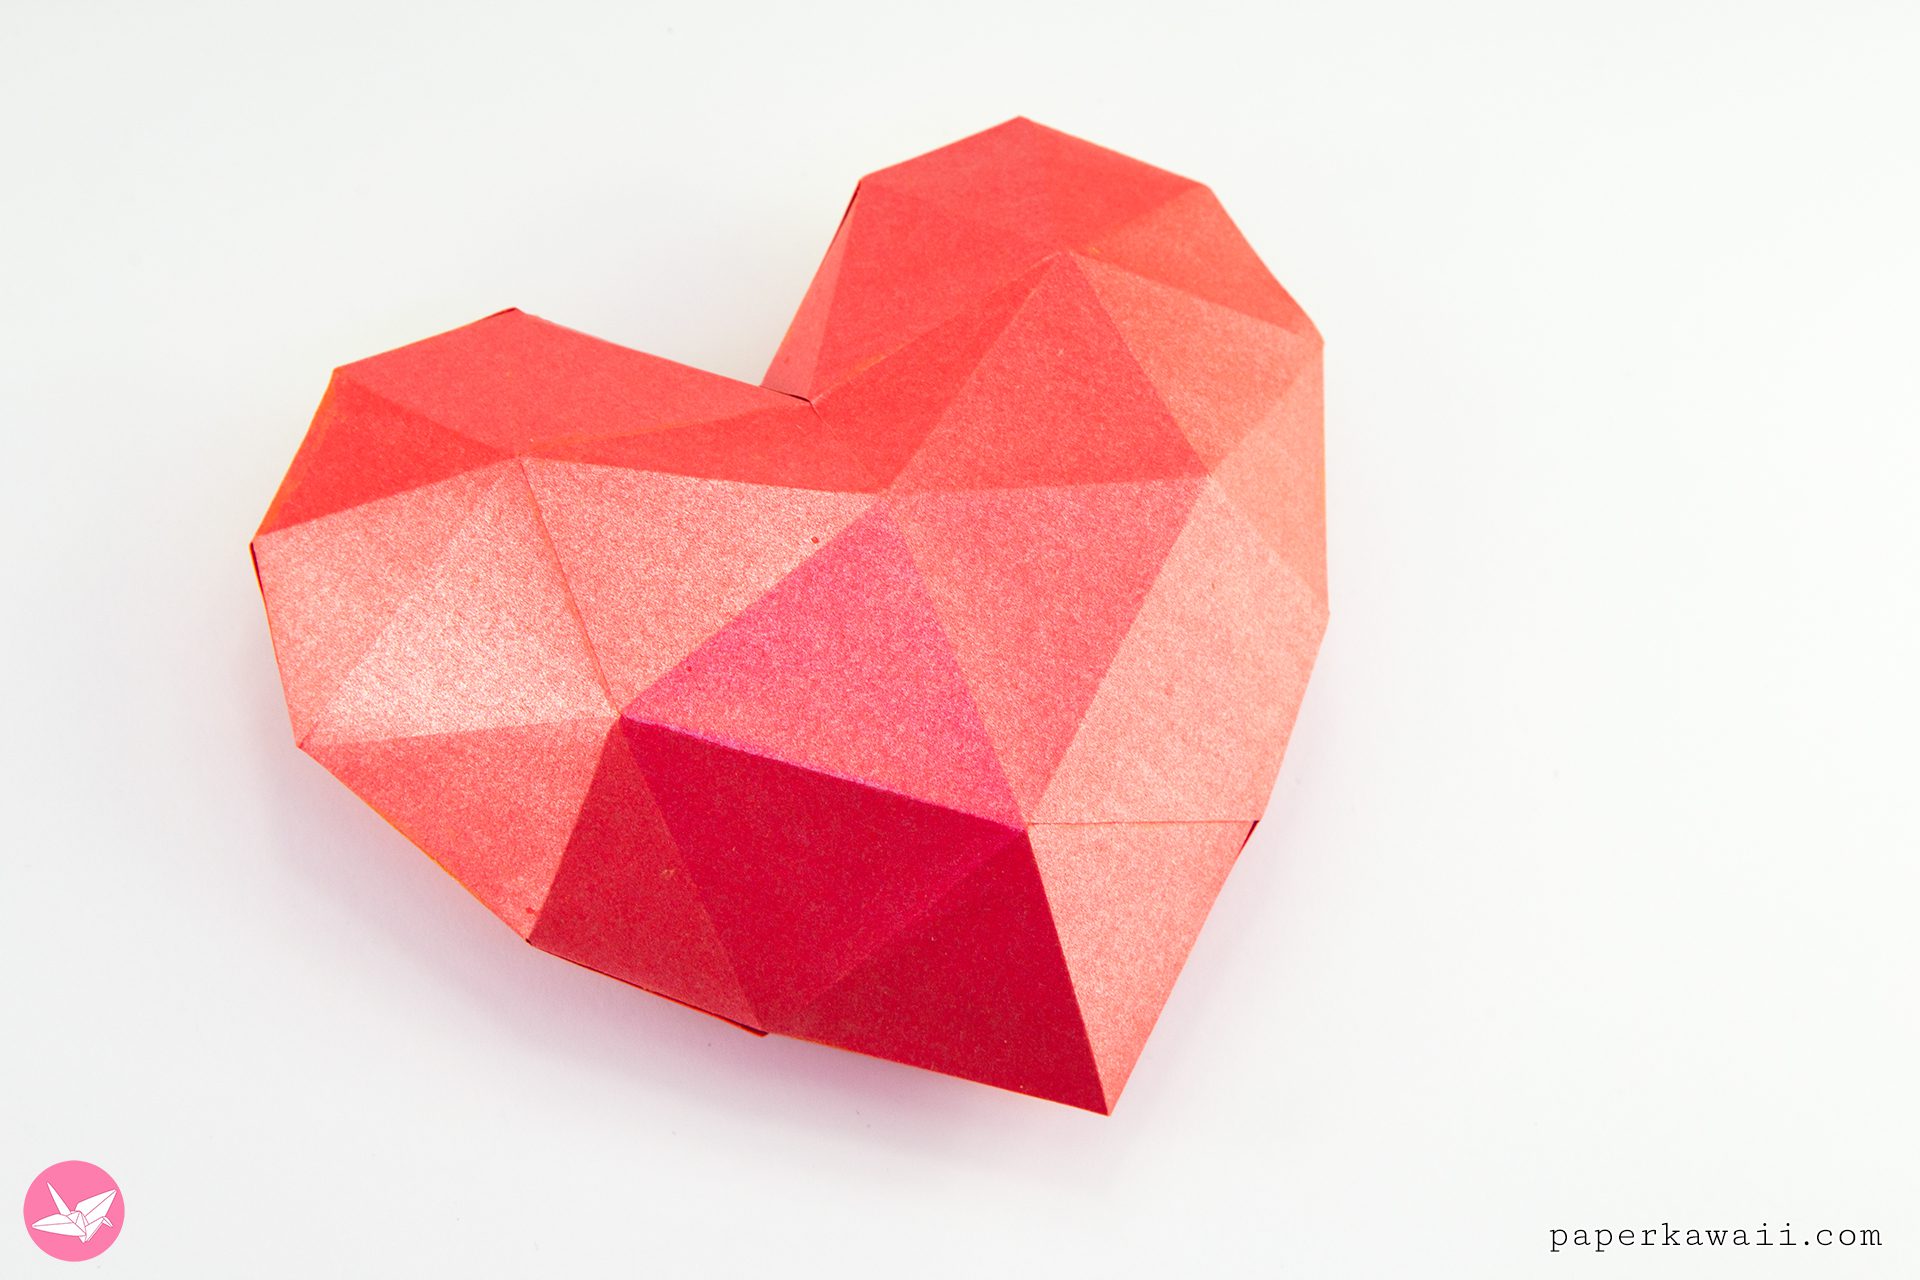 3D Paper Heart Tutorial & Free Template